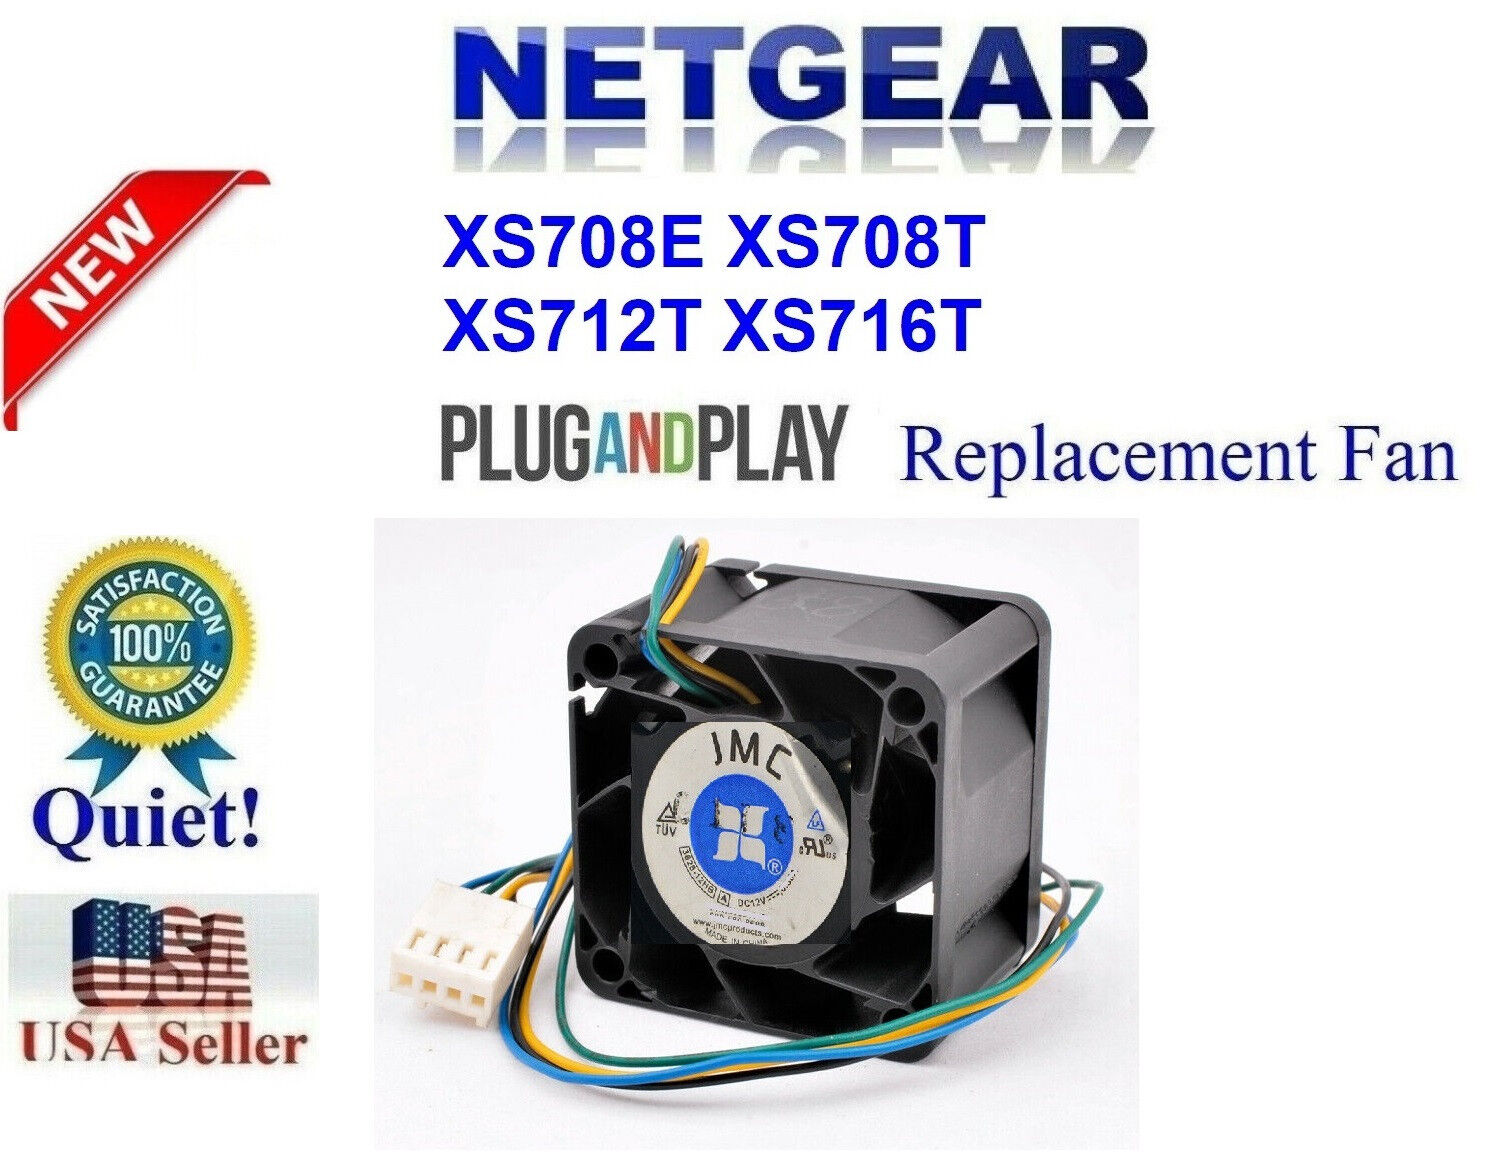 1x **Quiet** Replacement Fan for Netgear ProSafe XS708T XS708E XS712T XS716T